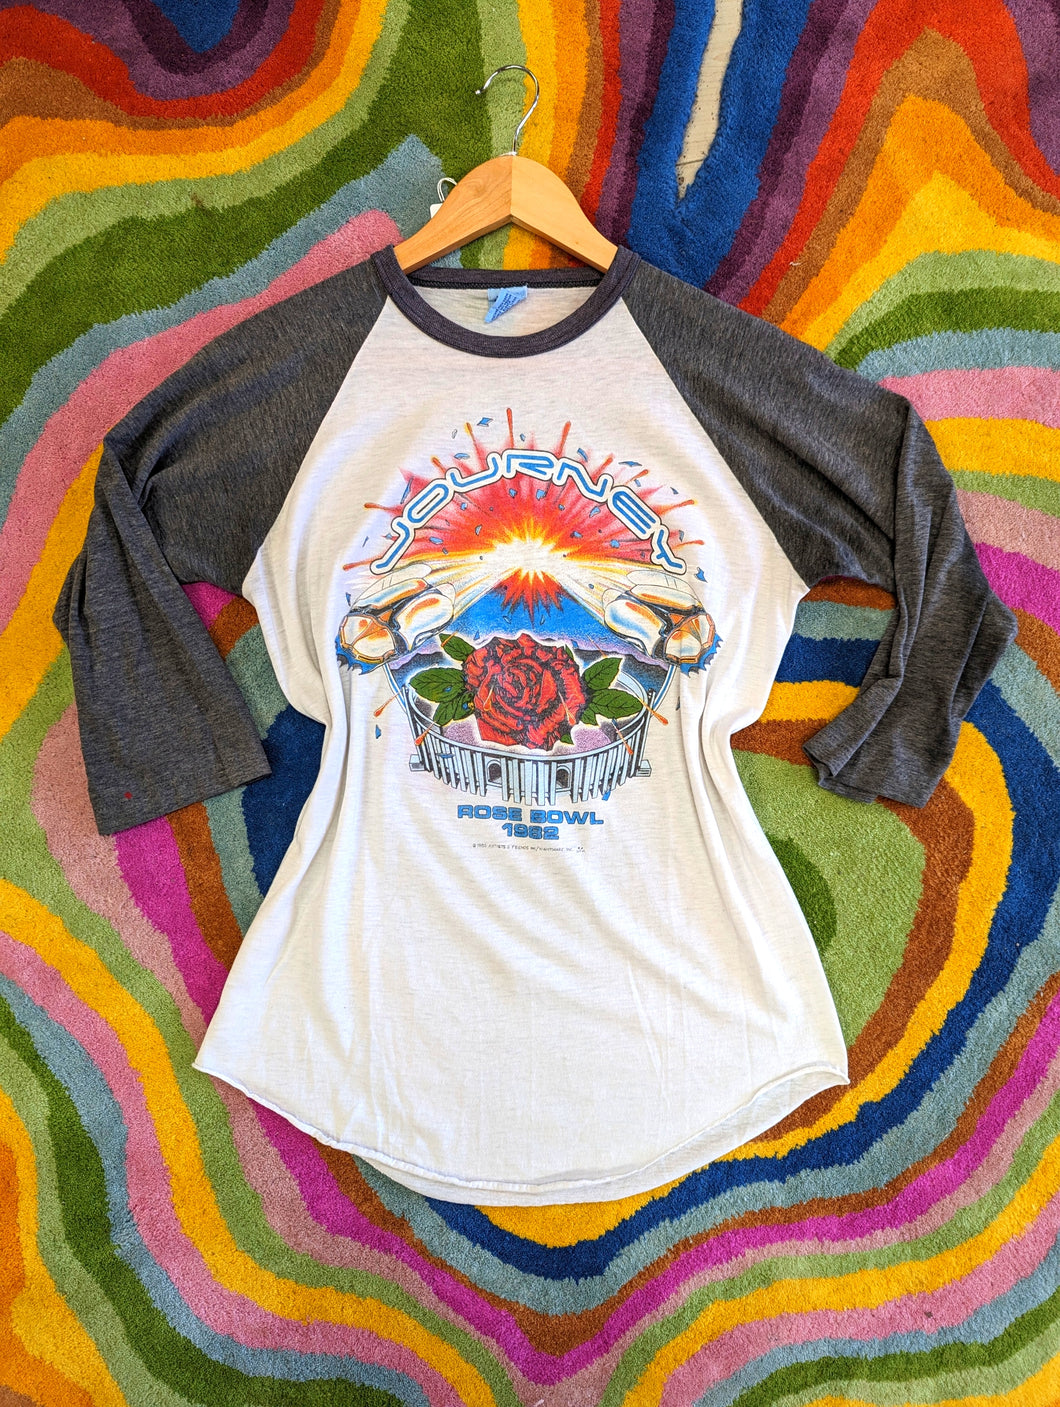 Vintage Journey, Blue Oyster Cult, Triumph, Aldo Nova Rose Bowl 1982 Band Shirt SM